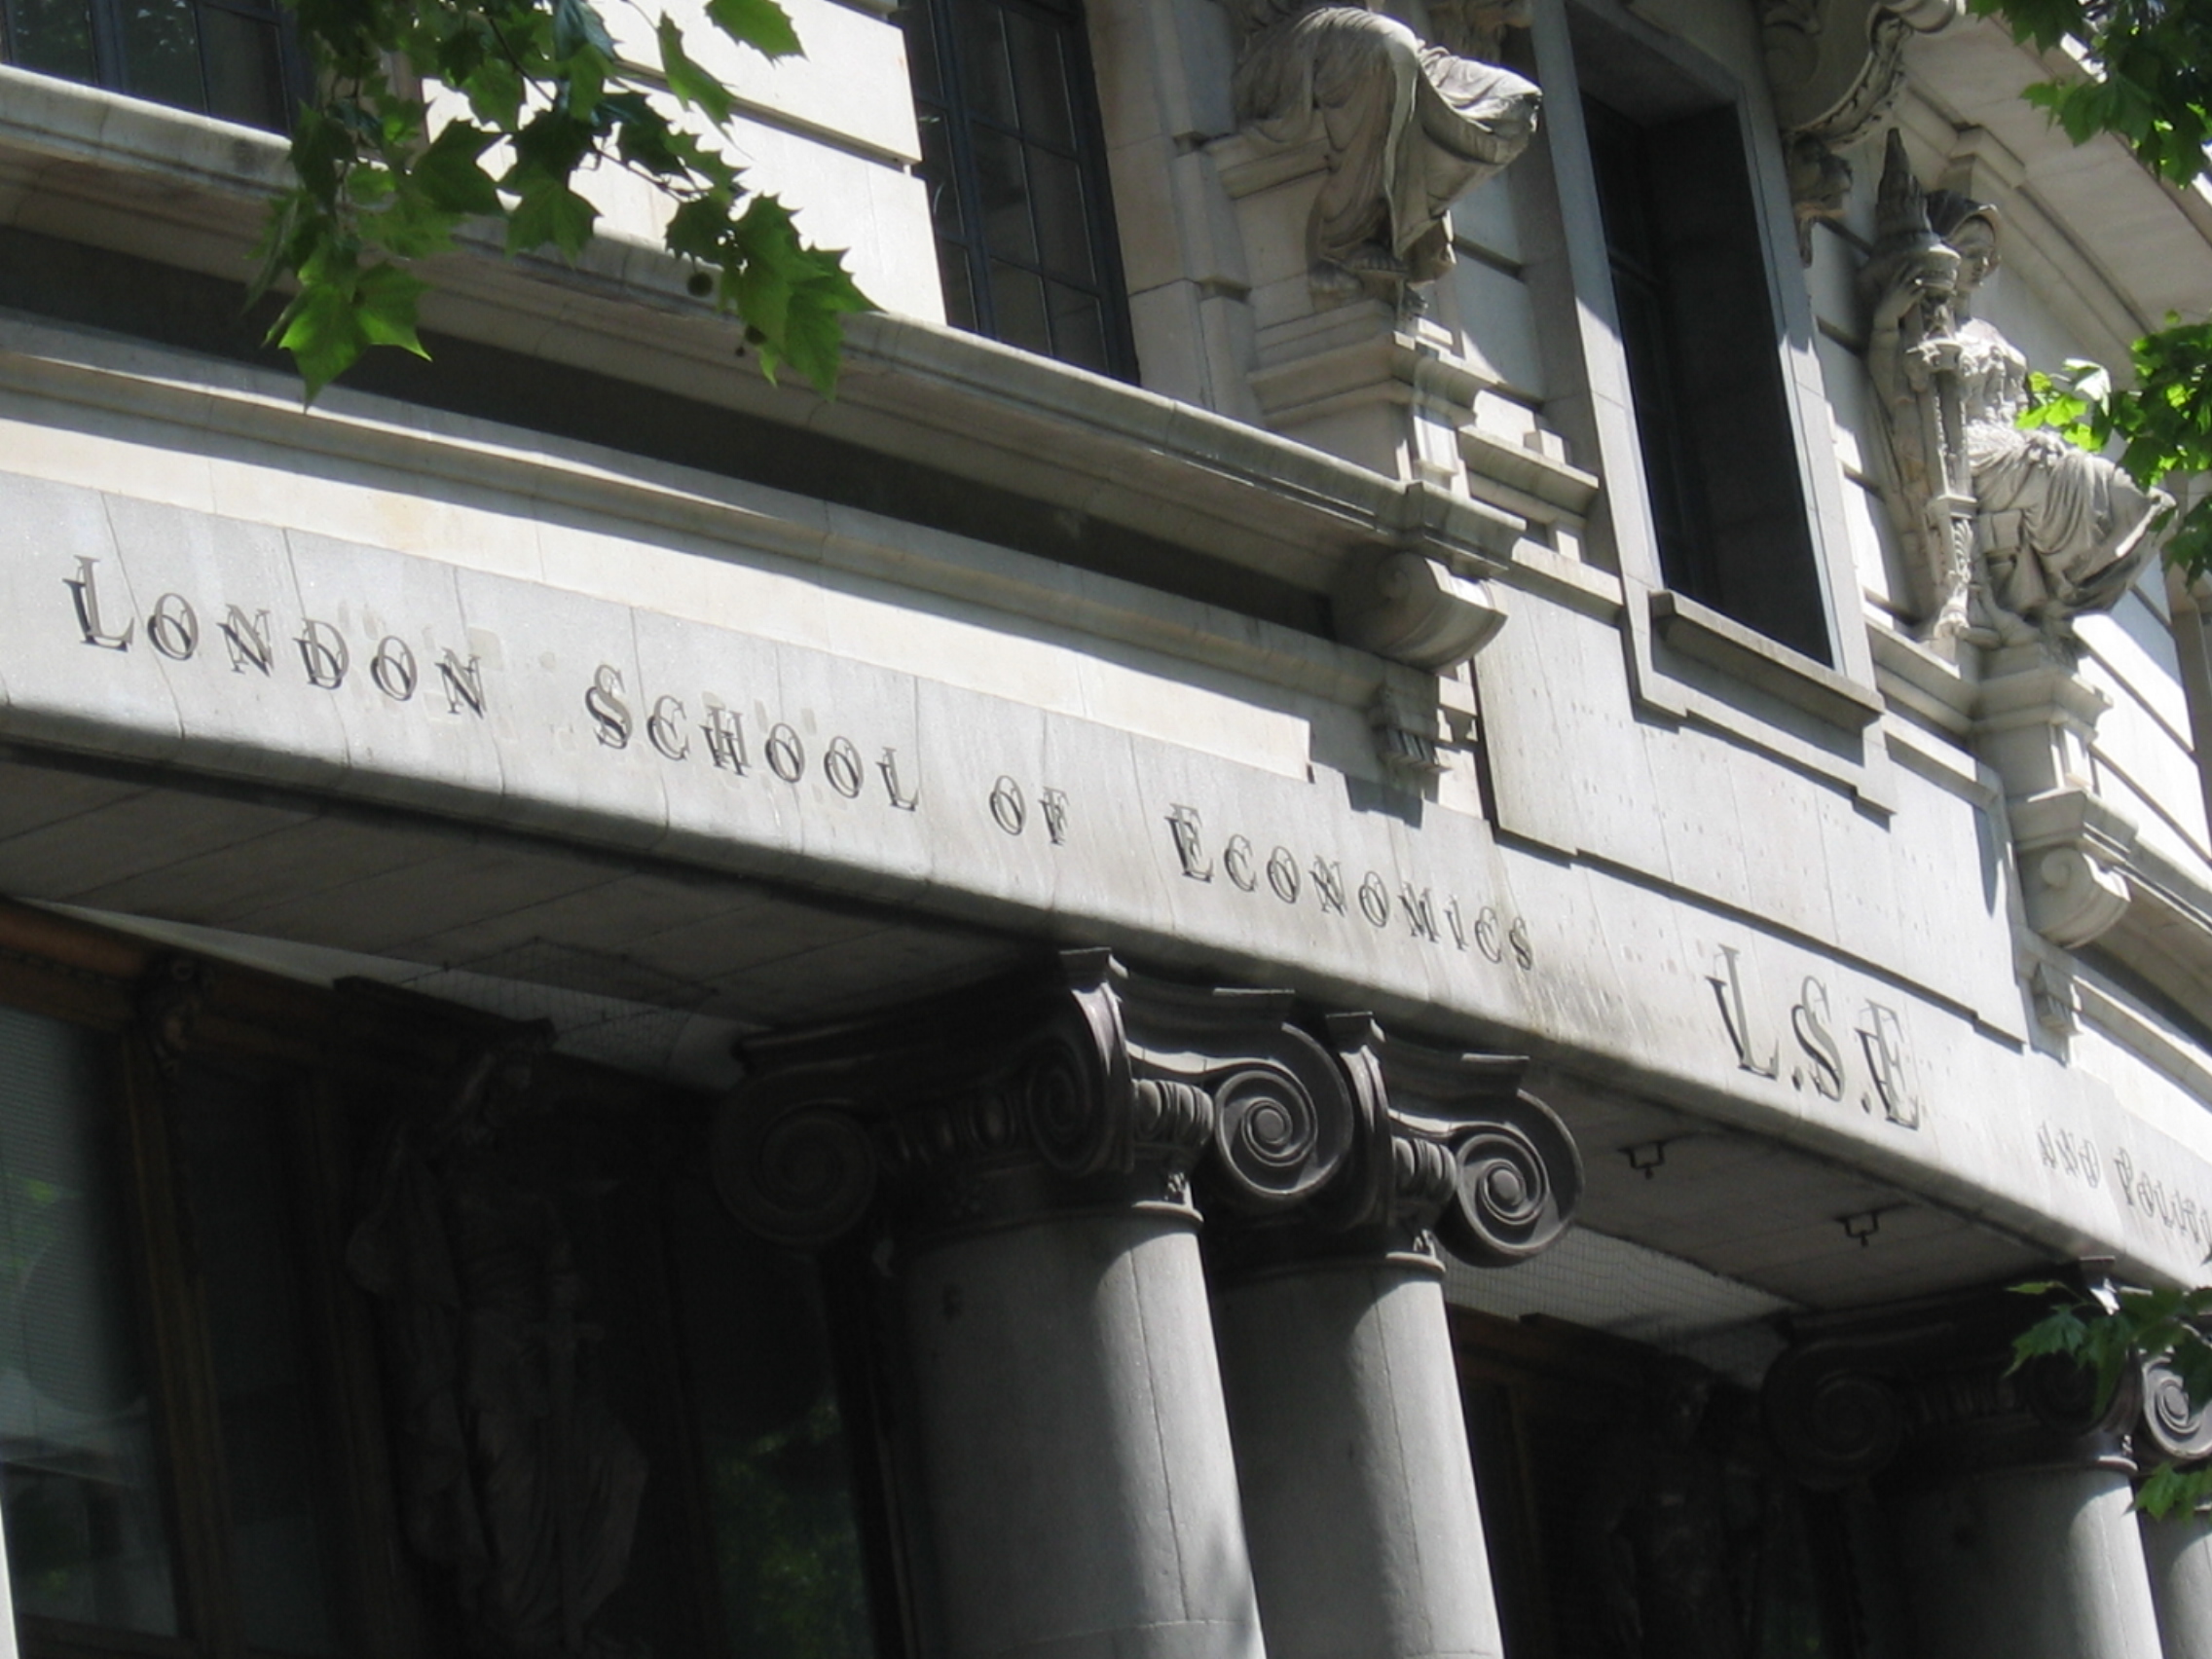 The London School of Economics D building